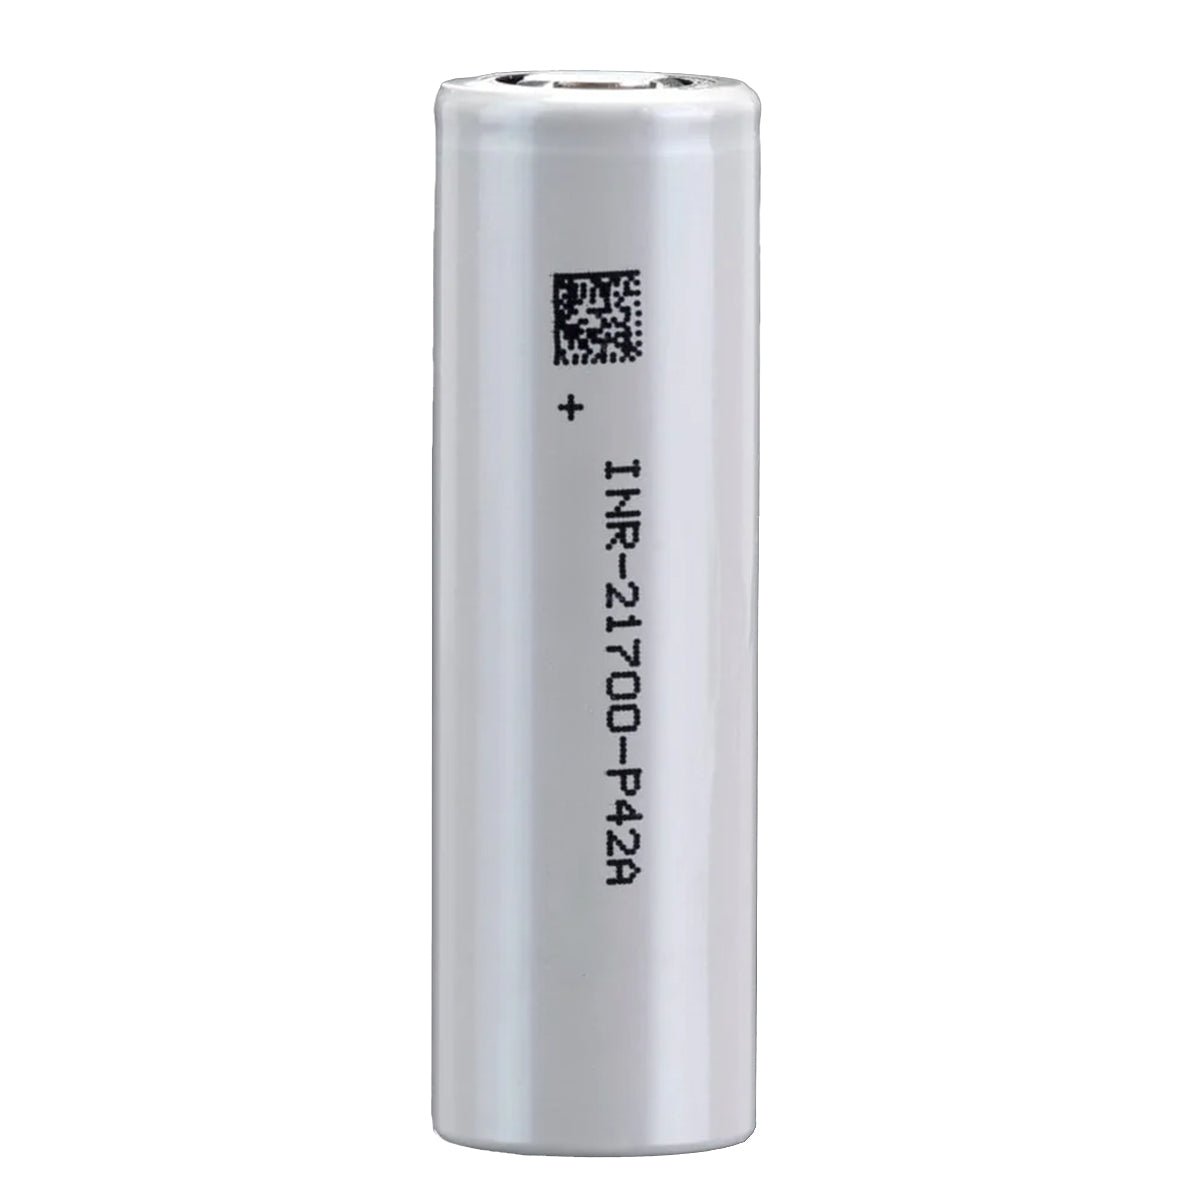 P42A 4200mah 21700 Vape Battery By Vapcell - Prime Vapes UK